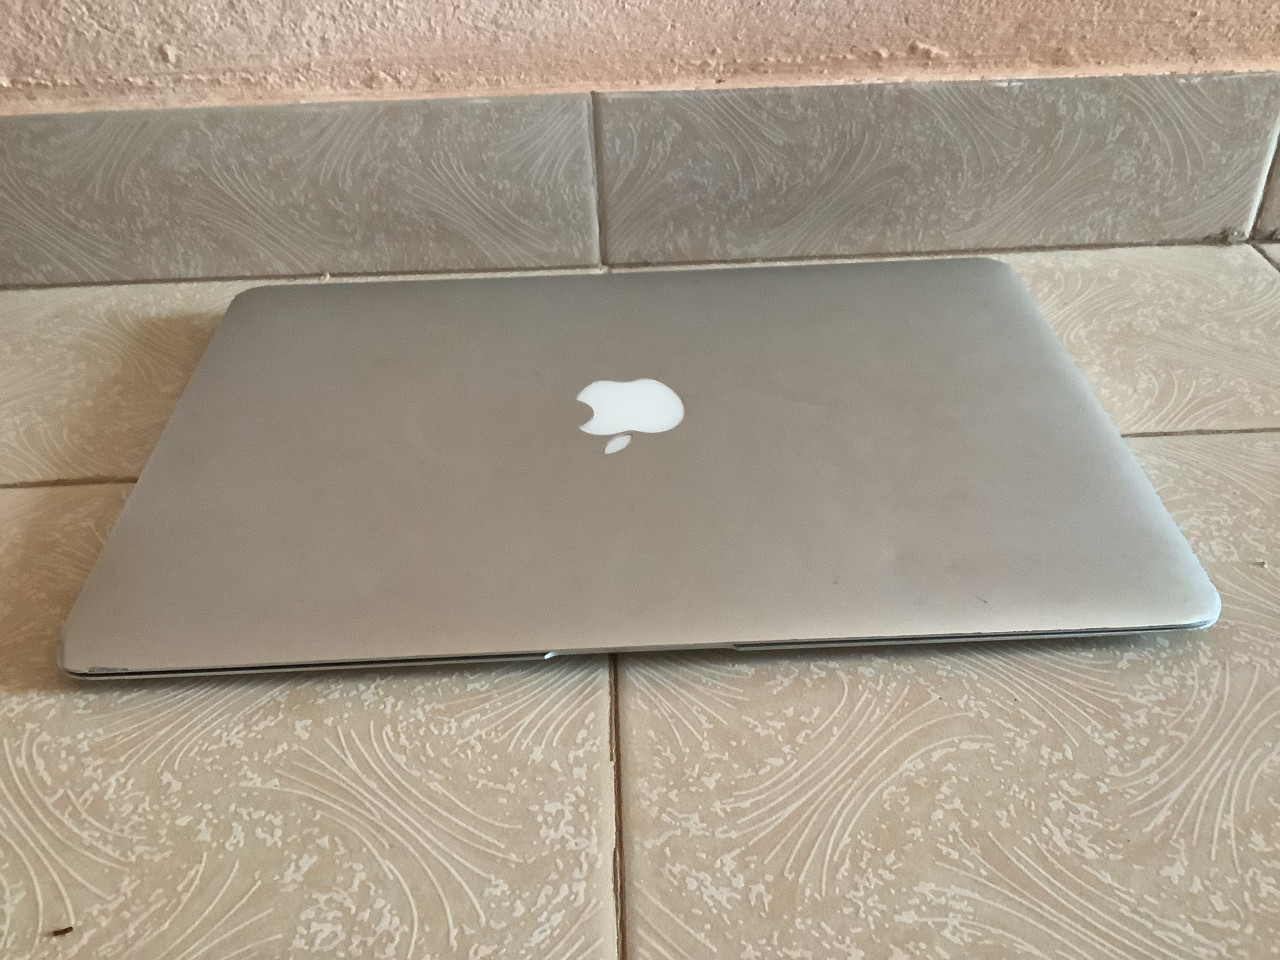 Apple MacBook Air, Computadores - Laptops, Bissau